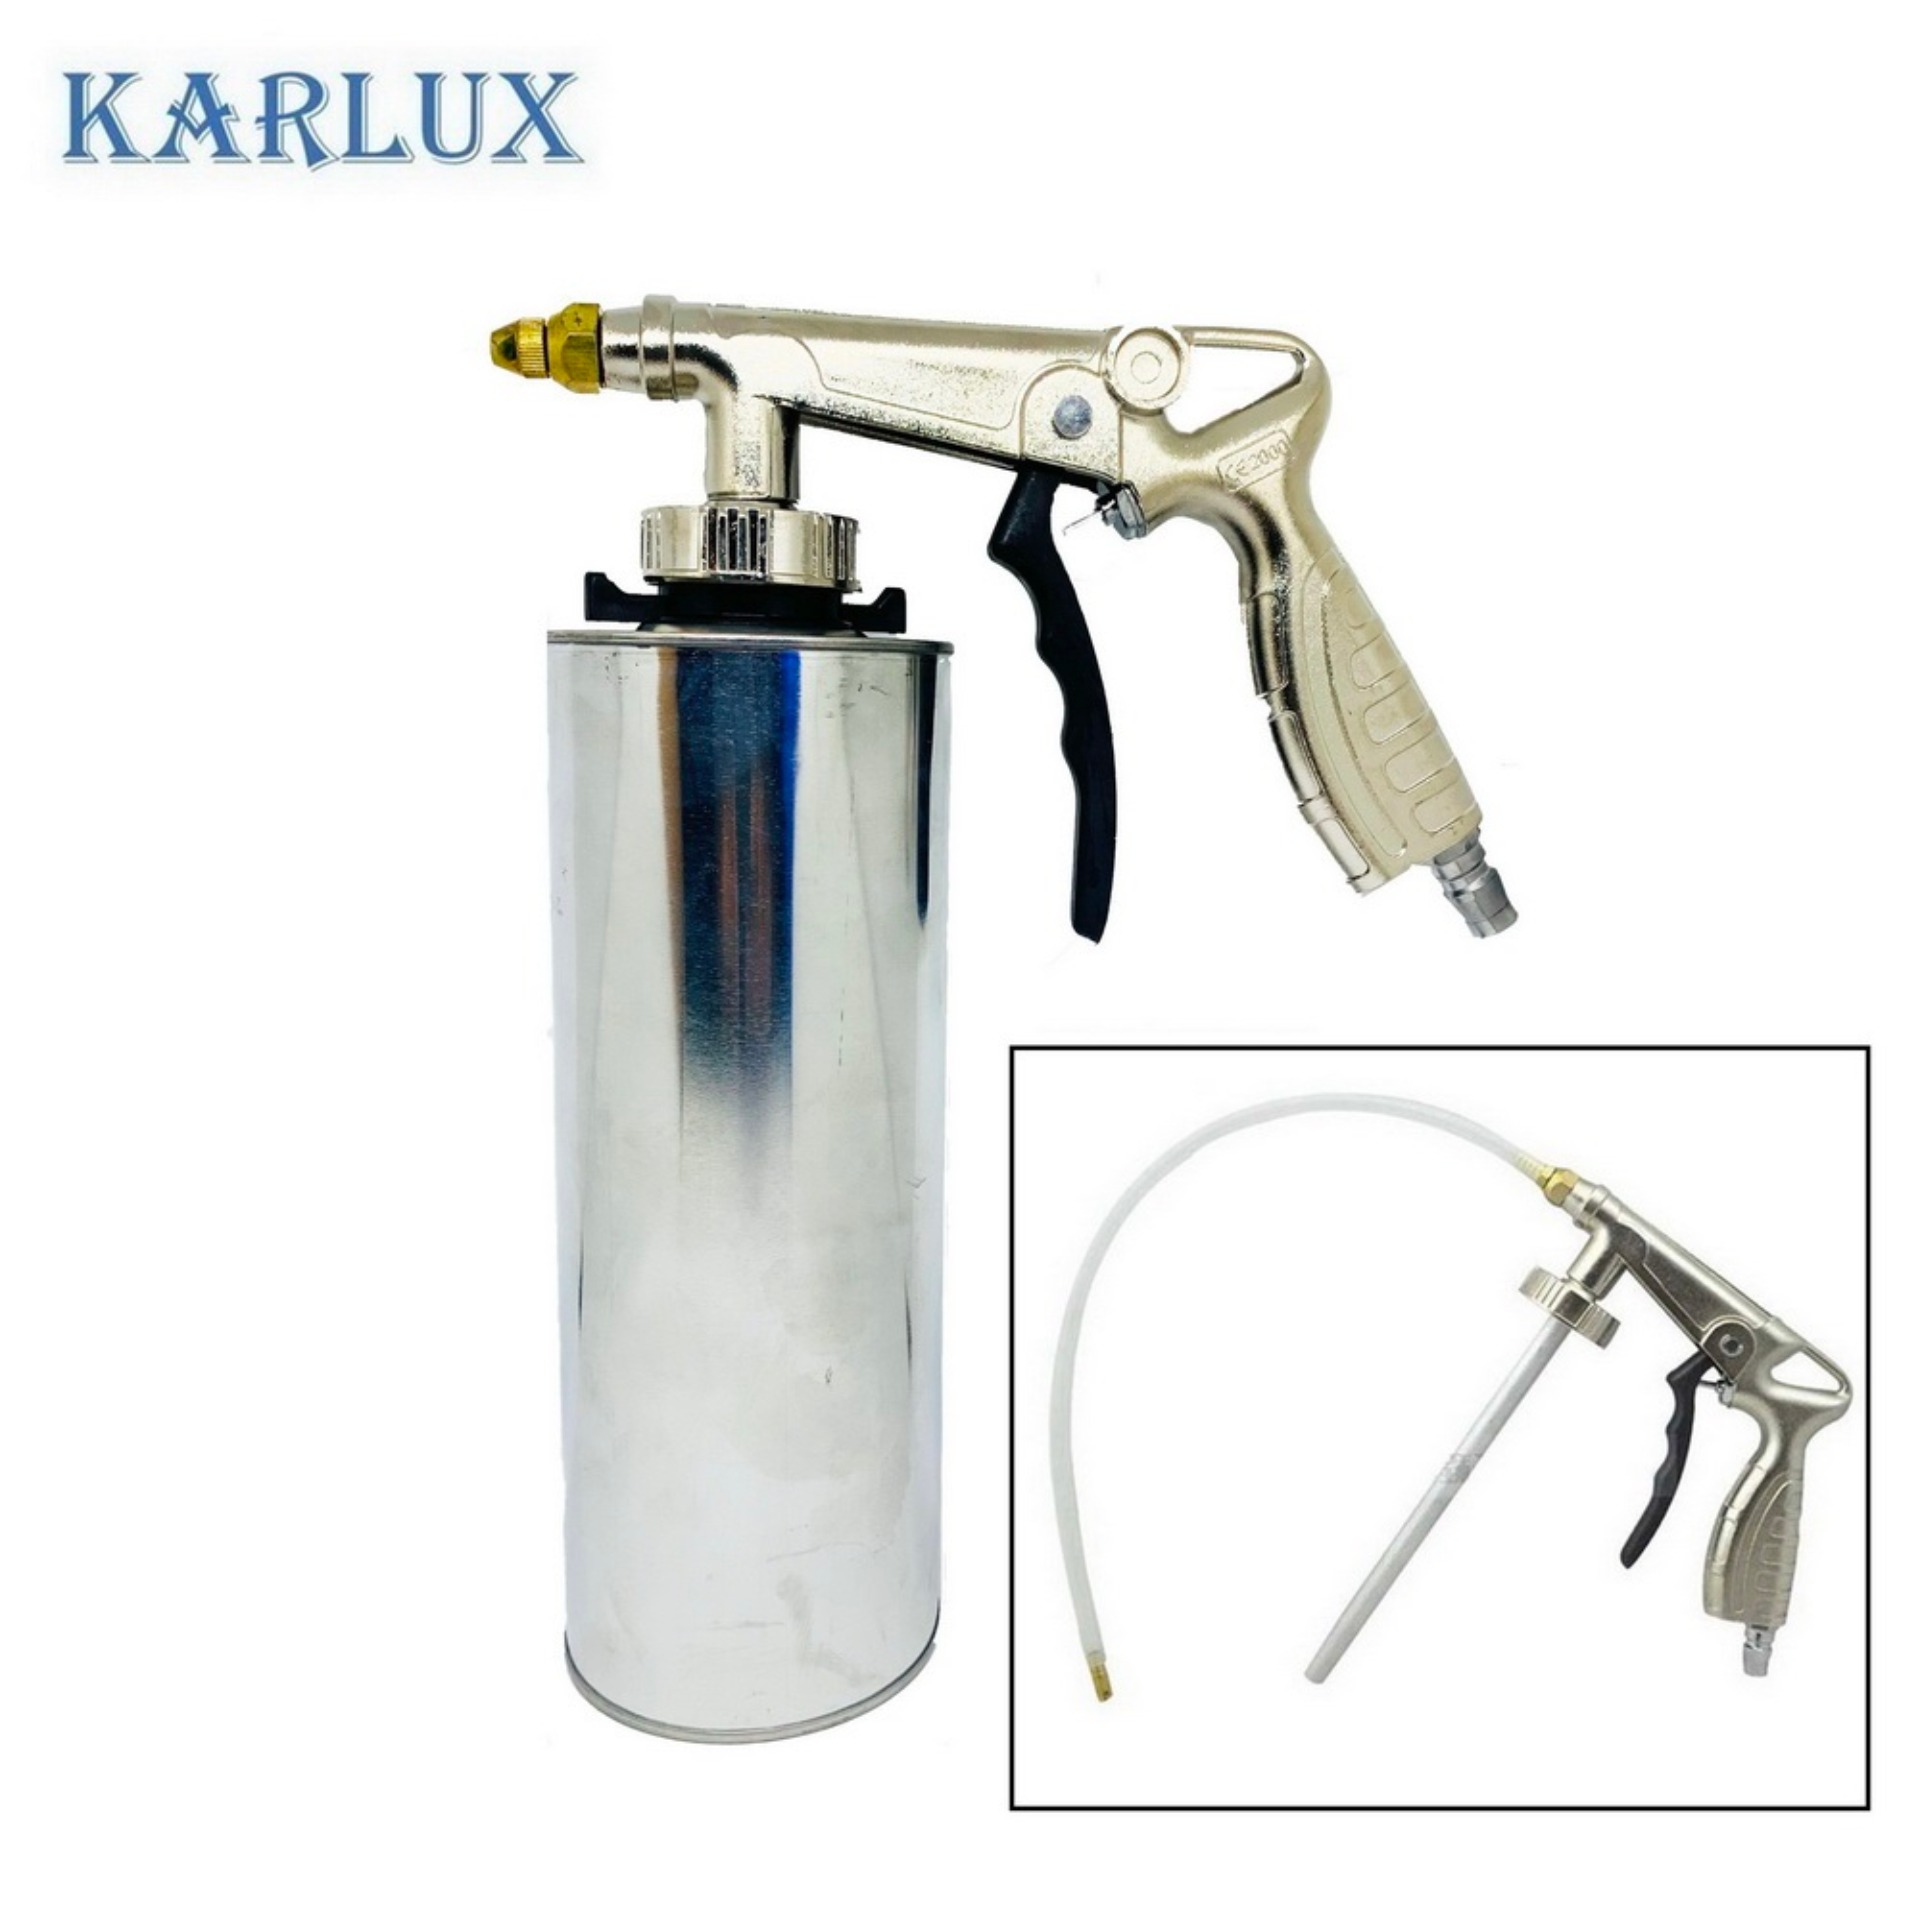 Karlux ปืนพ่นฟริ้นโค้ต พร้อมสายอ่อน และกระป๋องใส่น้ำยาขนาด 1 ลิตร Air Undercoating Spray Gun with Flex Hose and Bottle 1litre